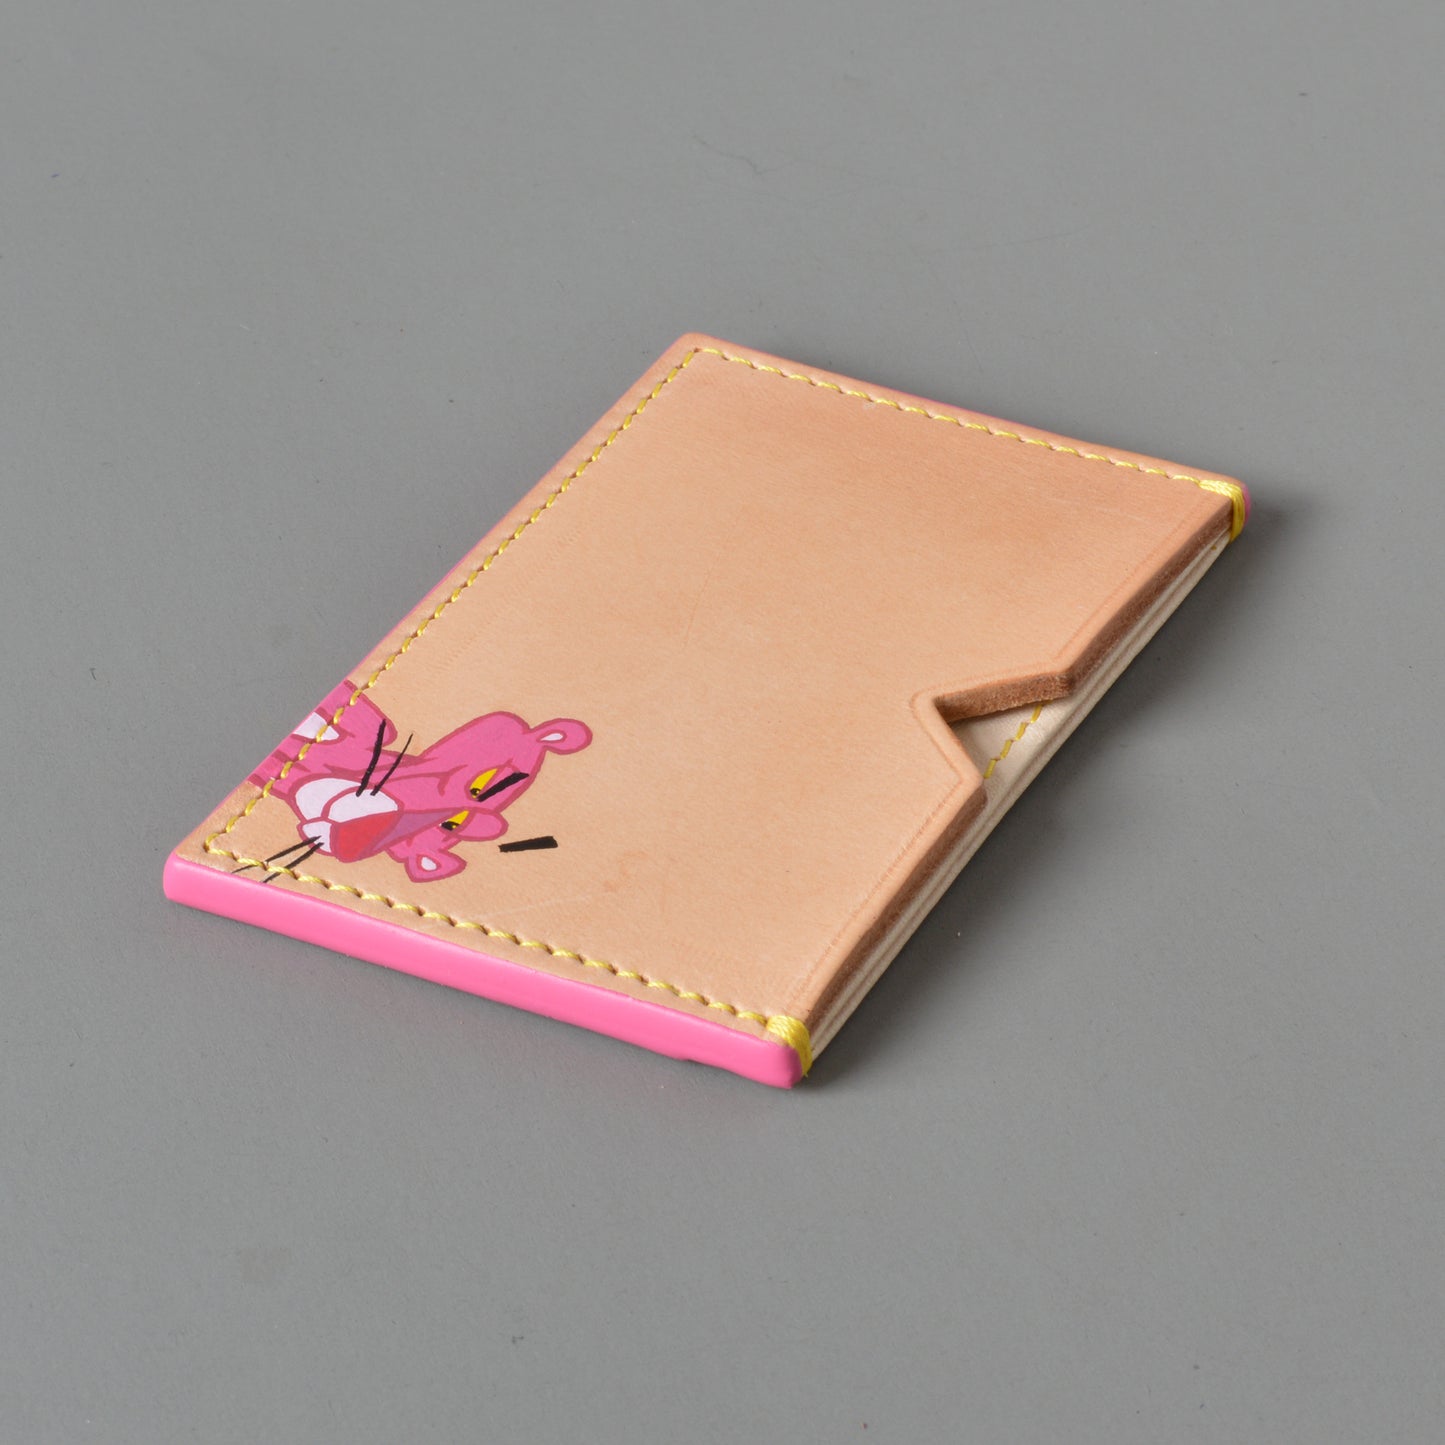 Card Wallet Pink Panther